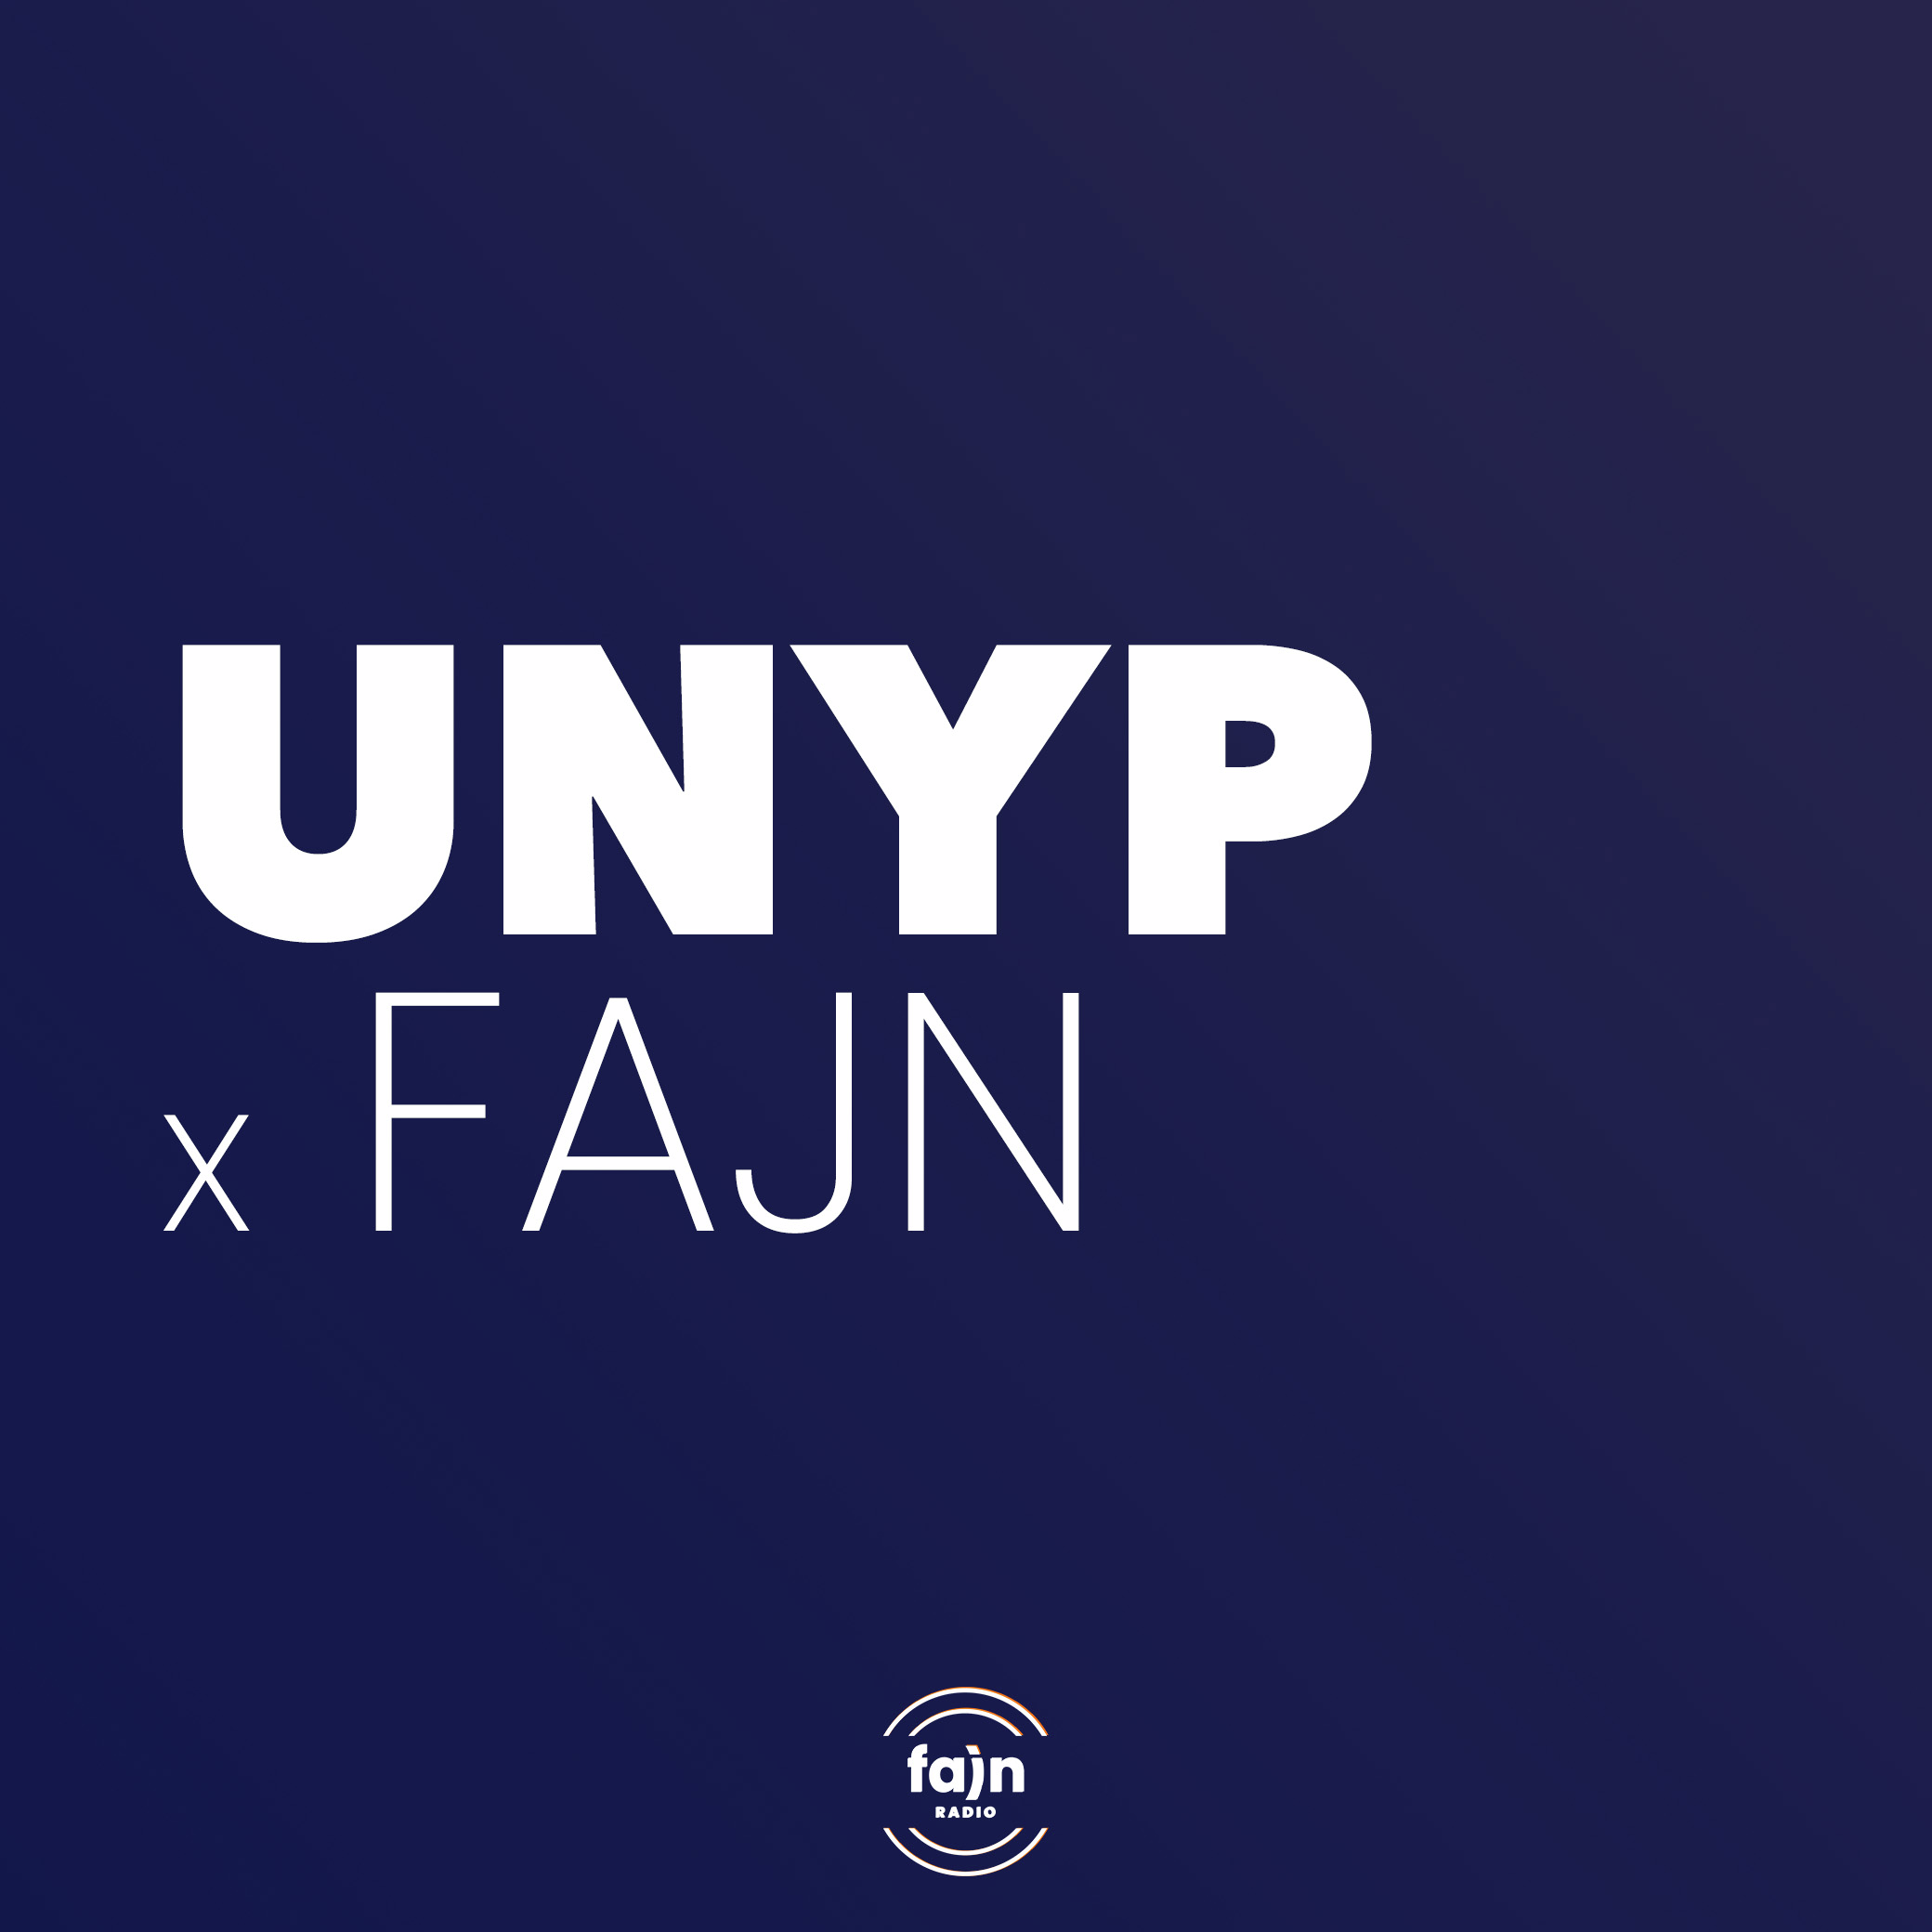 UNYP x Fajn (Dan Žlebek & Martin Smrž)